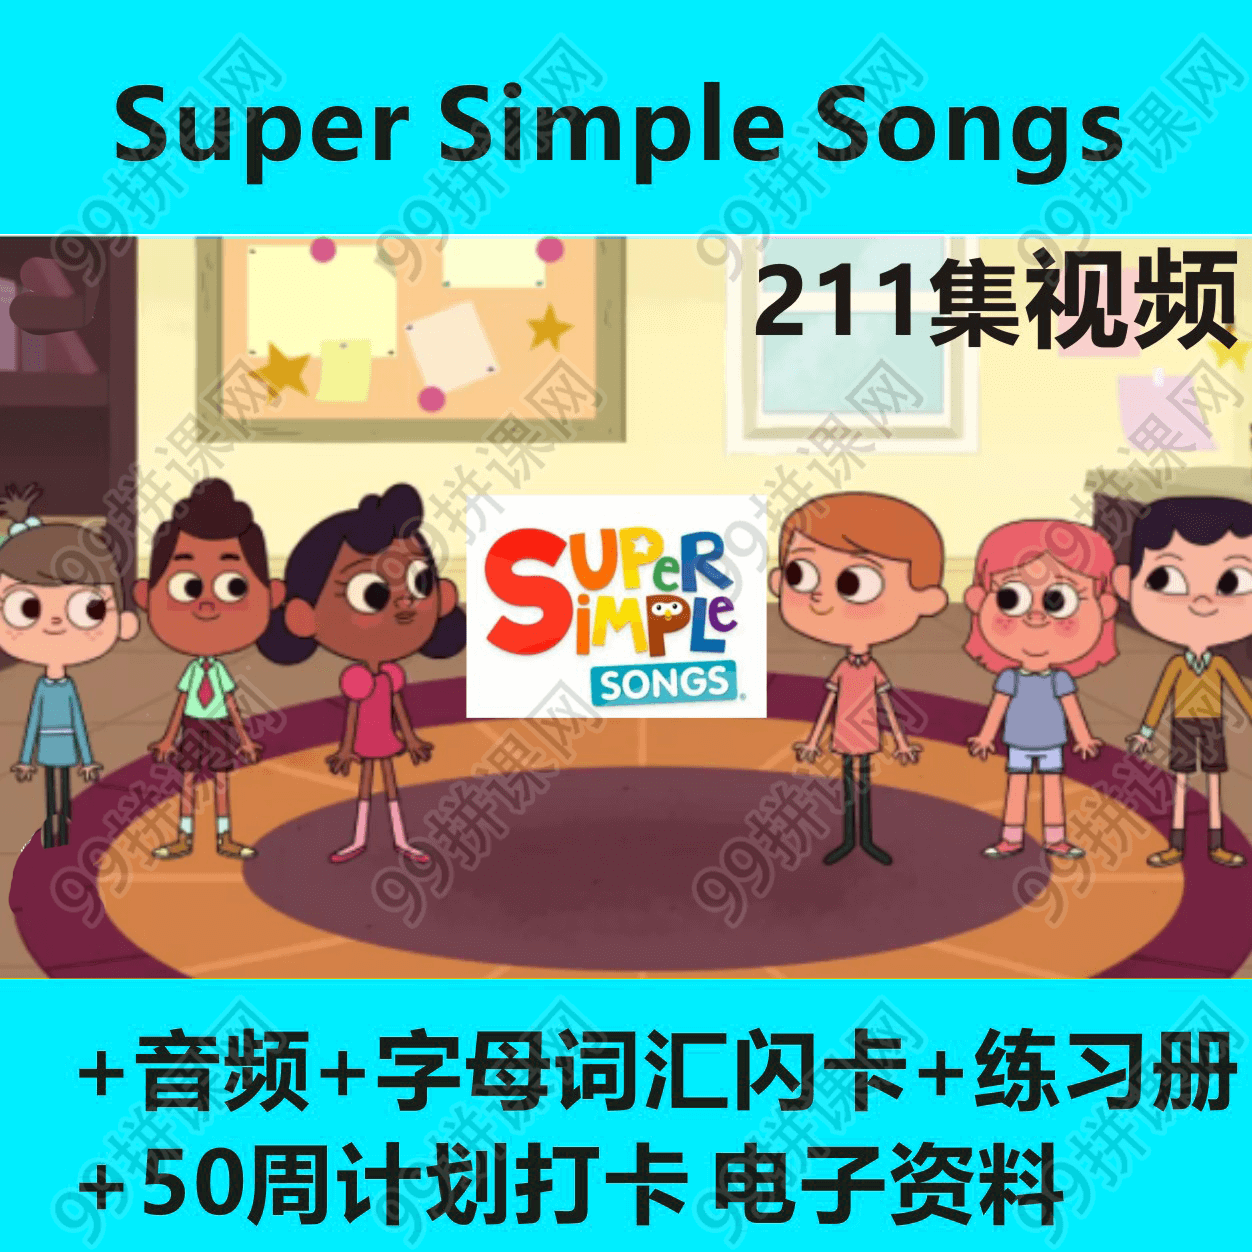 Super Simple Songs音频211首视频211个游戏卡歌词本练习册闪卡